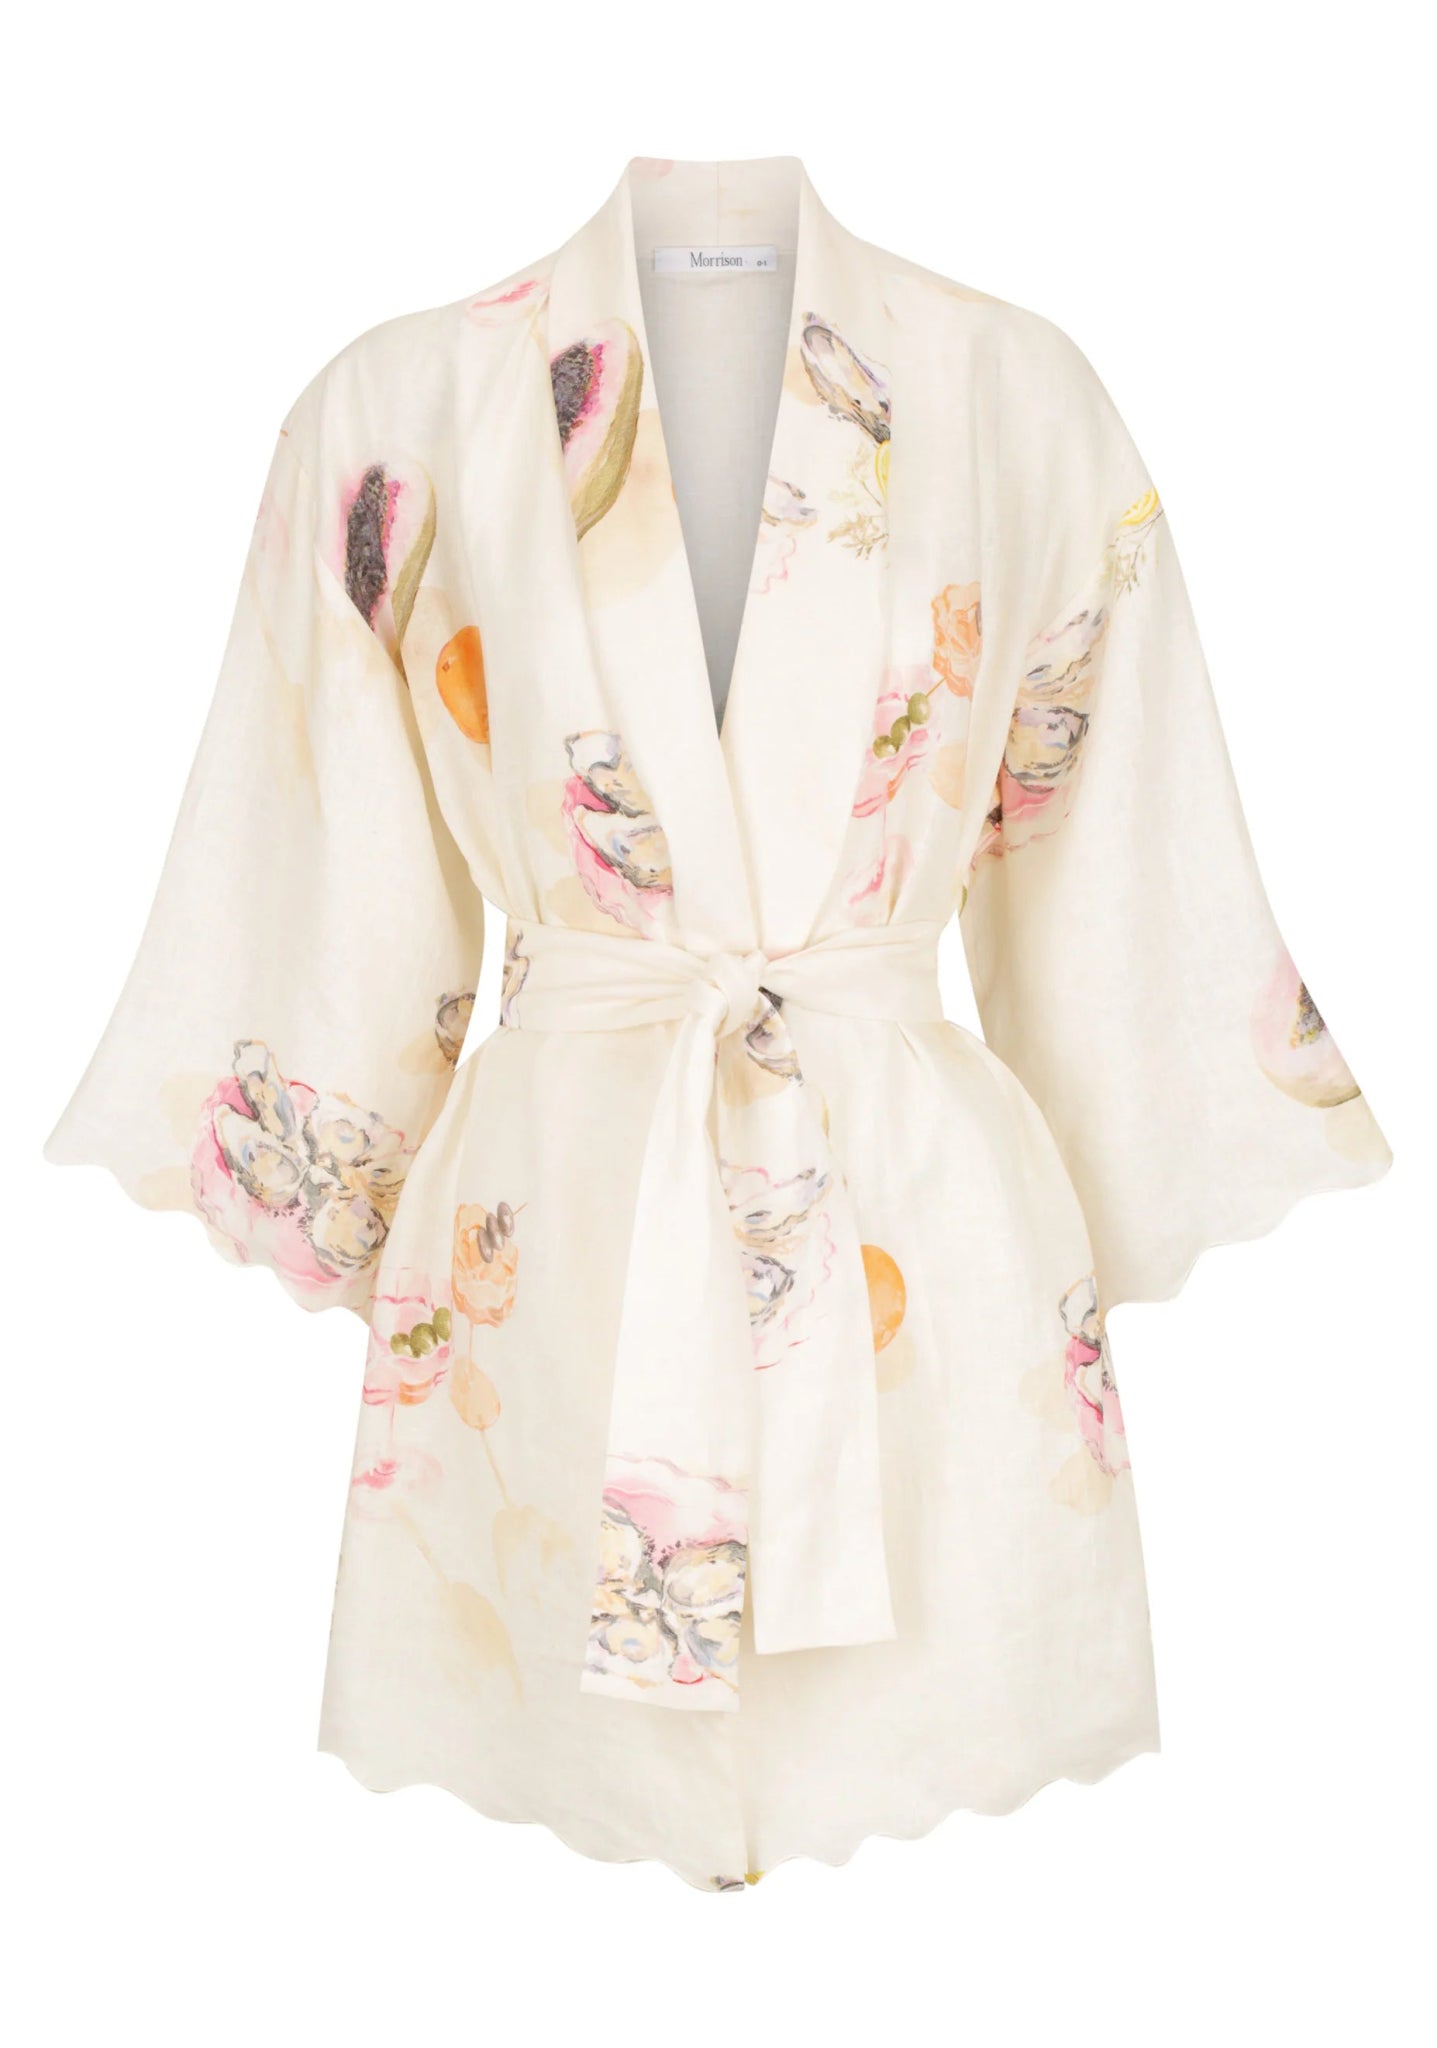 MORRISON - Aperitivo Linen Robe - Pinkhill, Darwin boutique, Australian high end fashion, Darwin Fashion